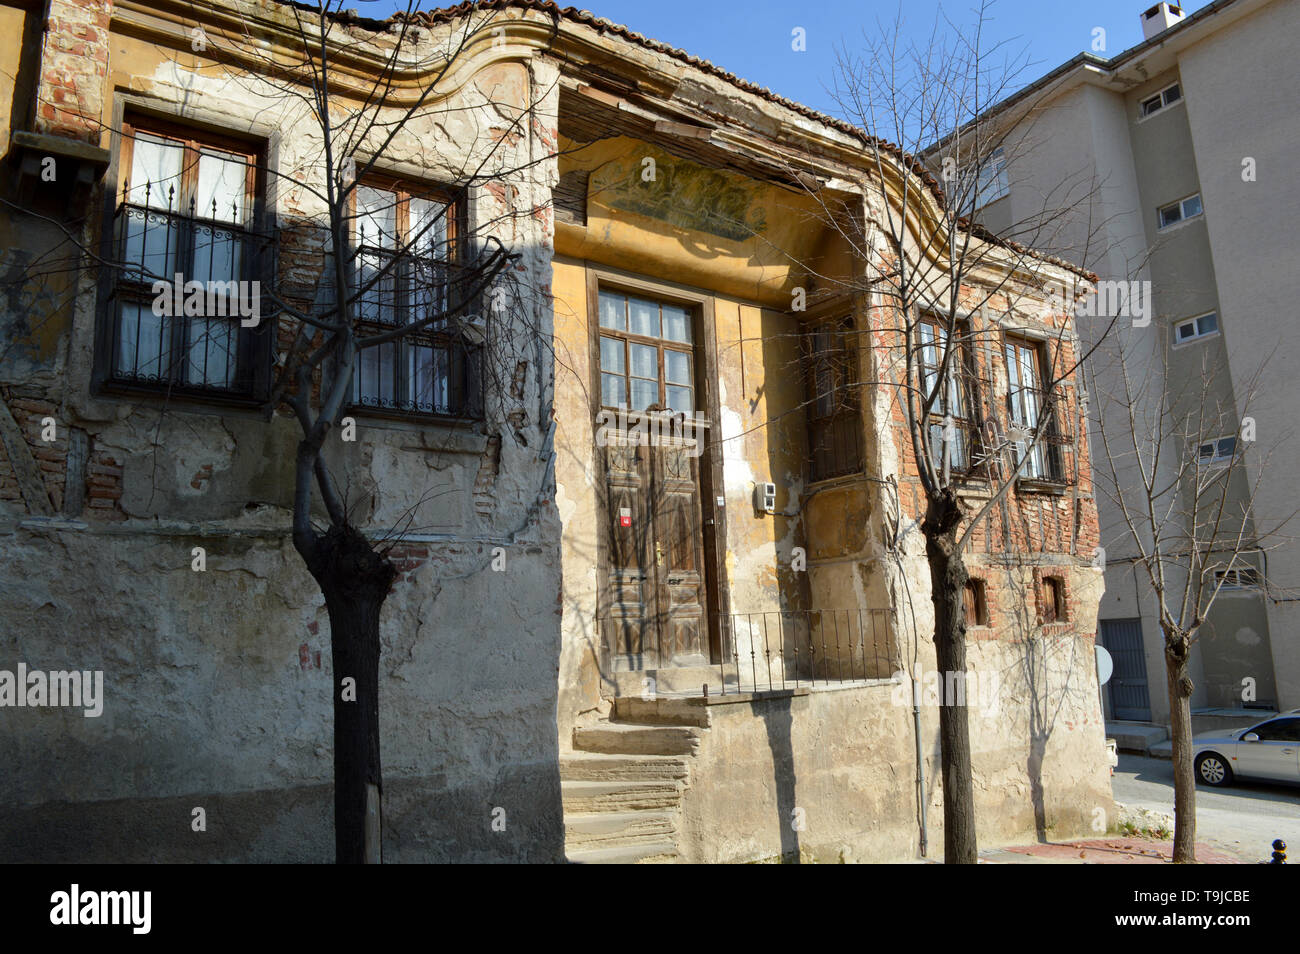 Town of Kirklareli and Surroundings, Turkey (2014) Stock Photo